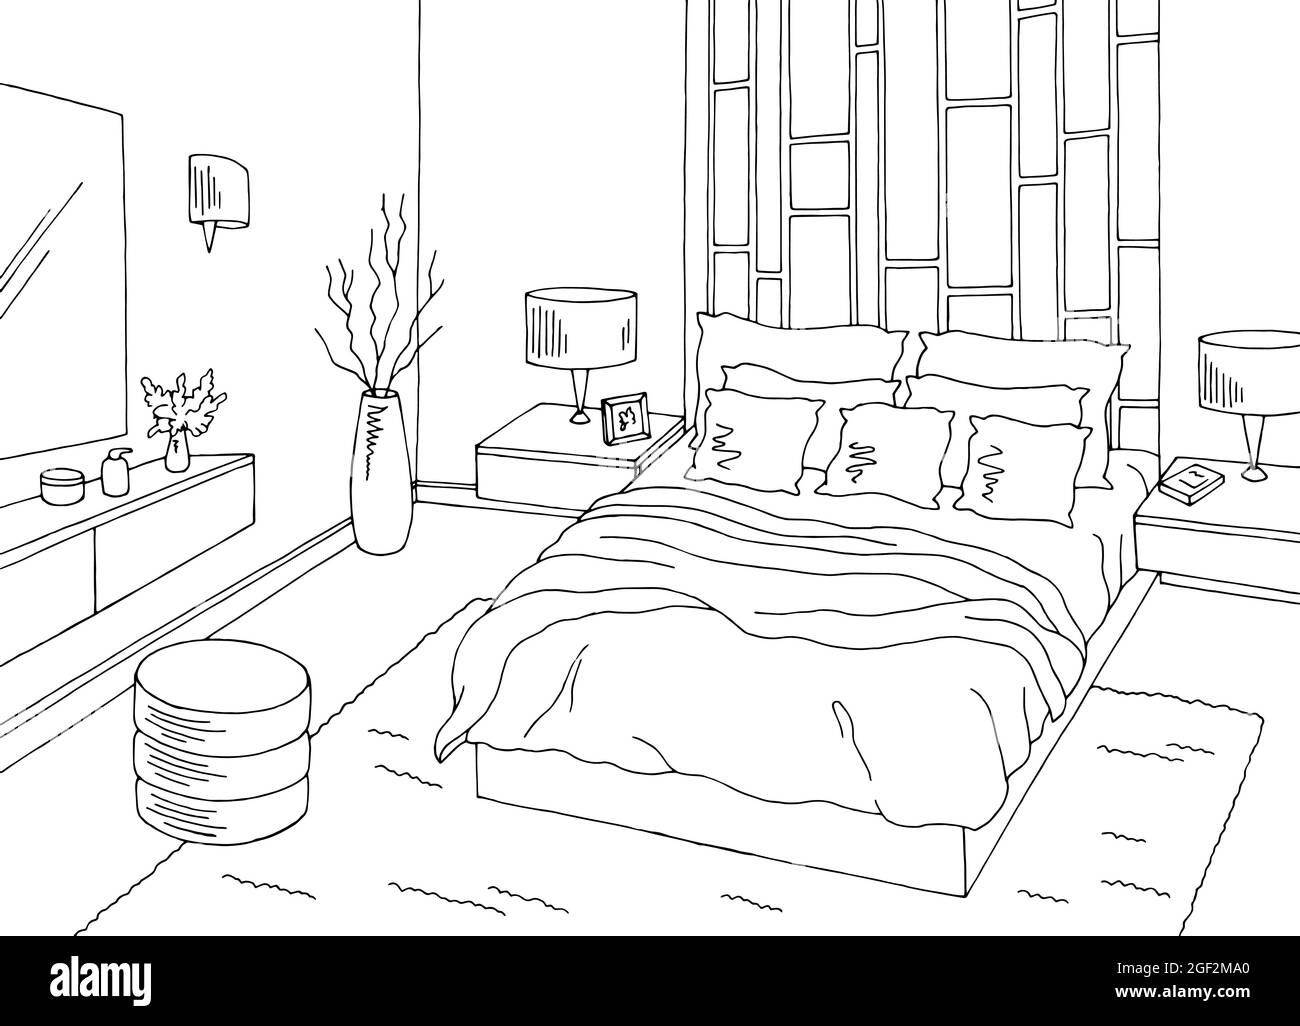 Schlafzimmer Grafik schwarz weiß Innenraum Skizze Illustration Vektor Stock Vektor